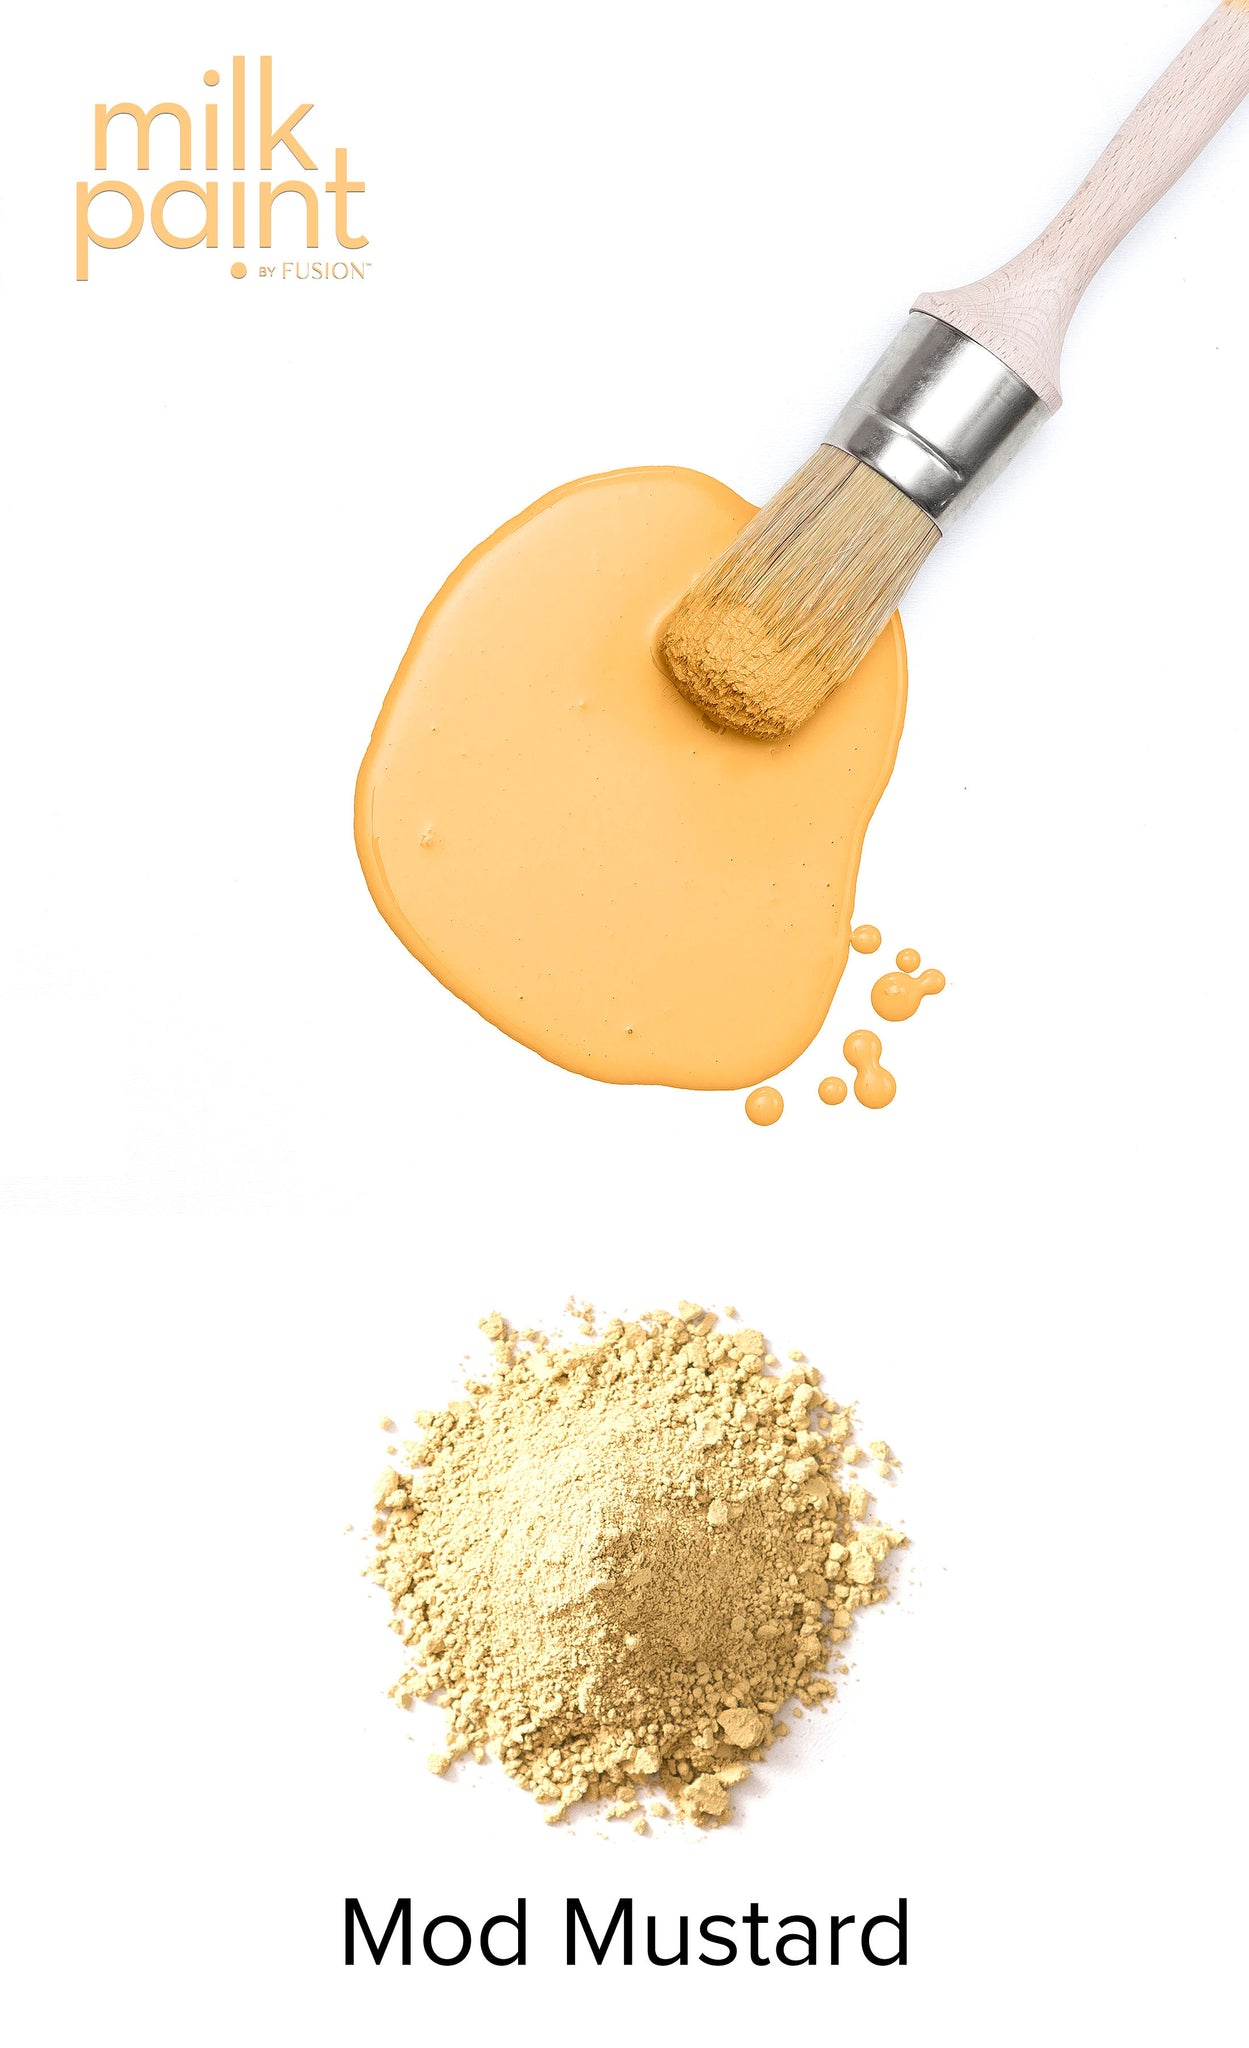 Mod Mustard Milk Paint by Fusion